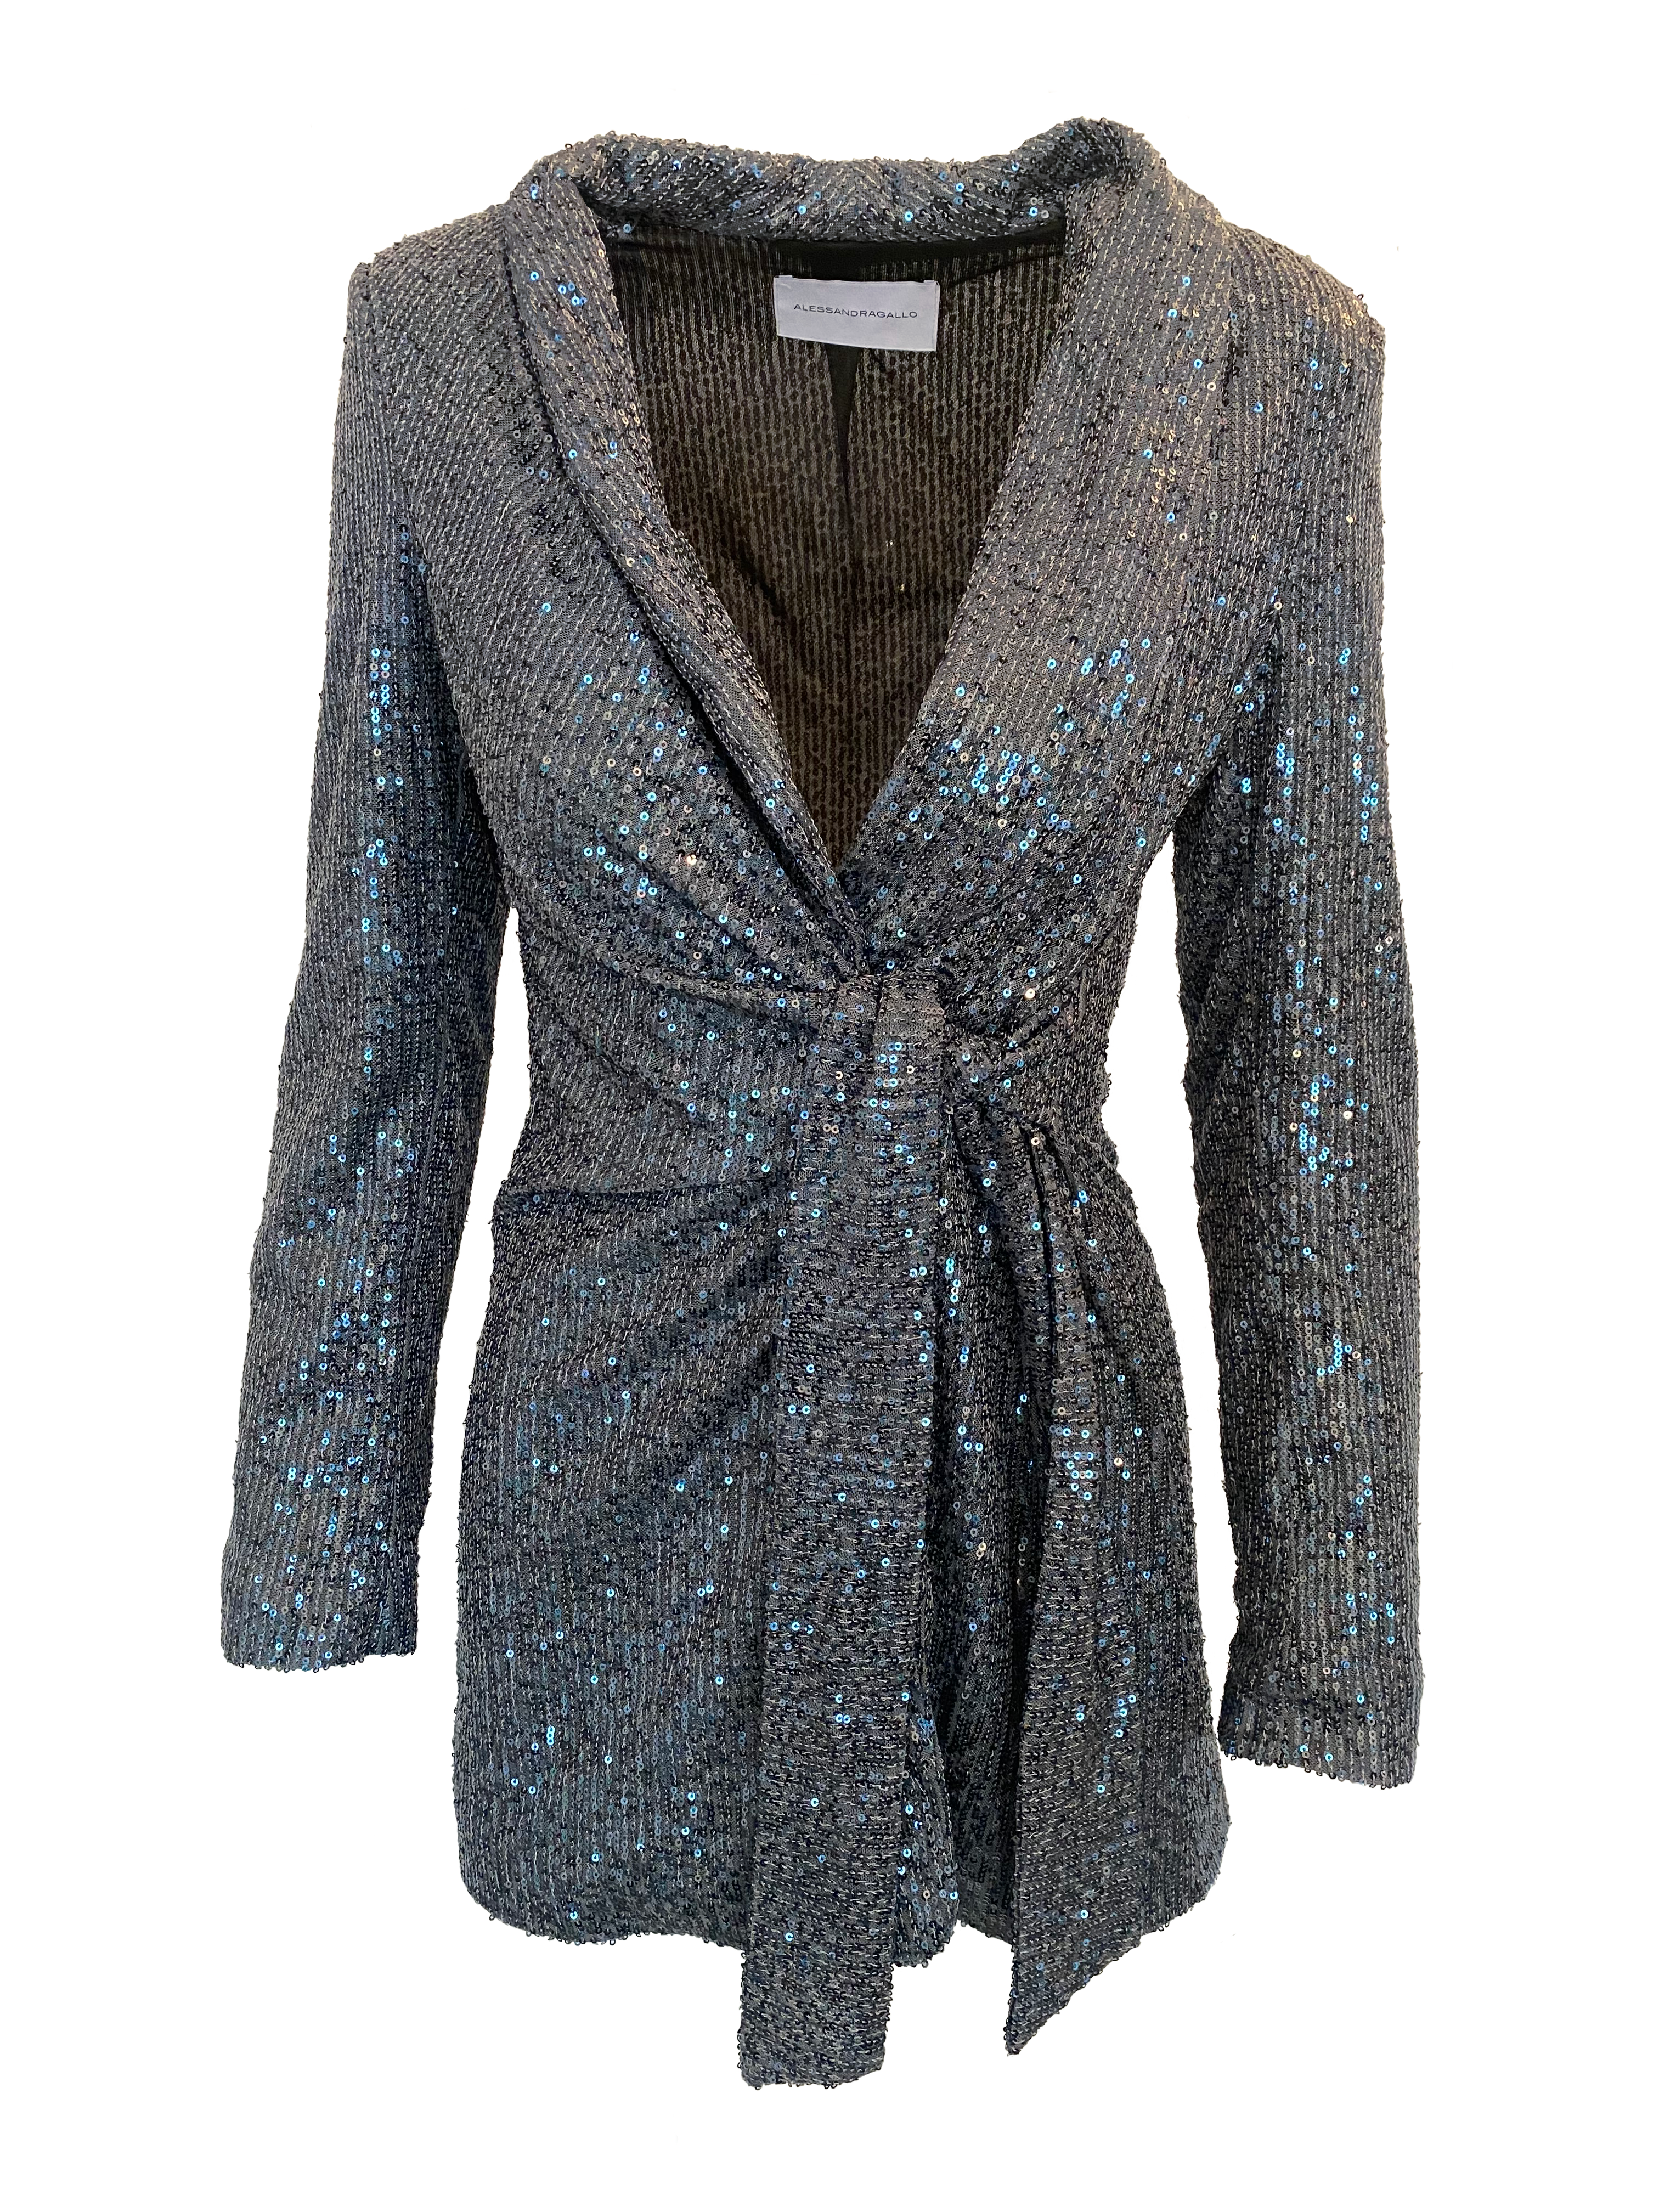 MEROPE - light blue sequin jacket